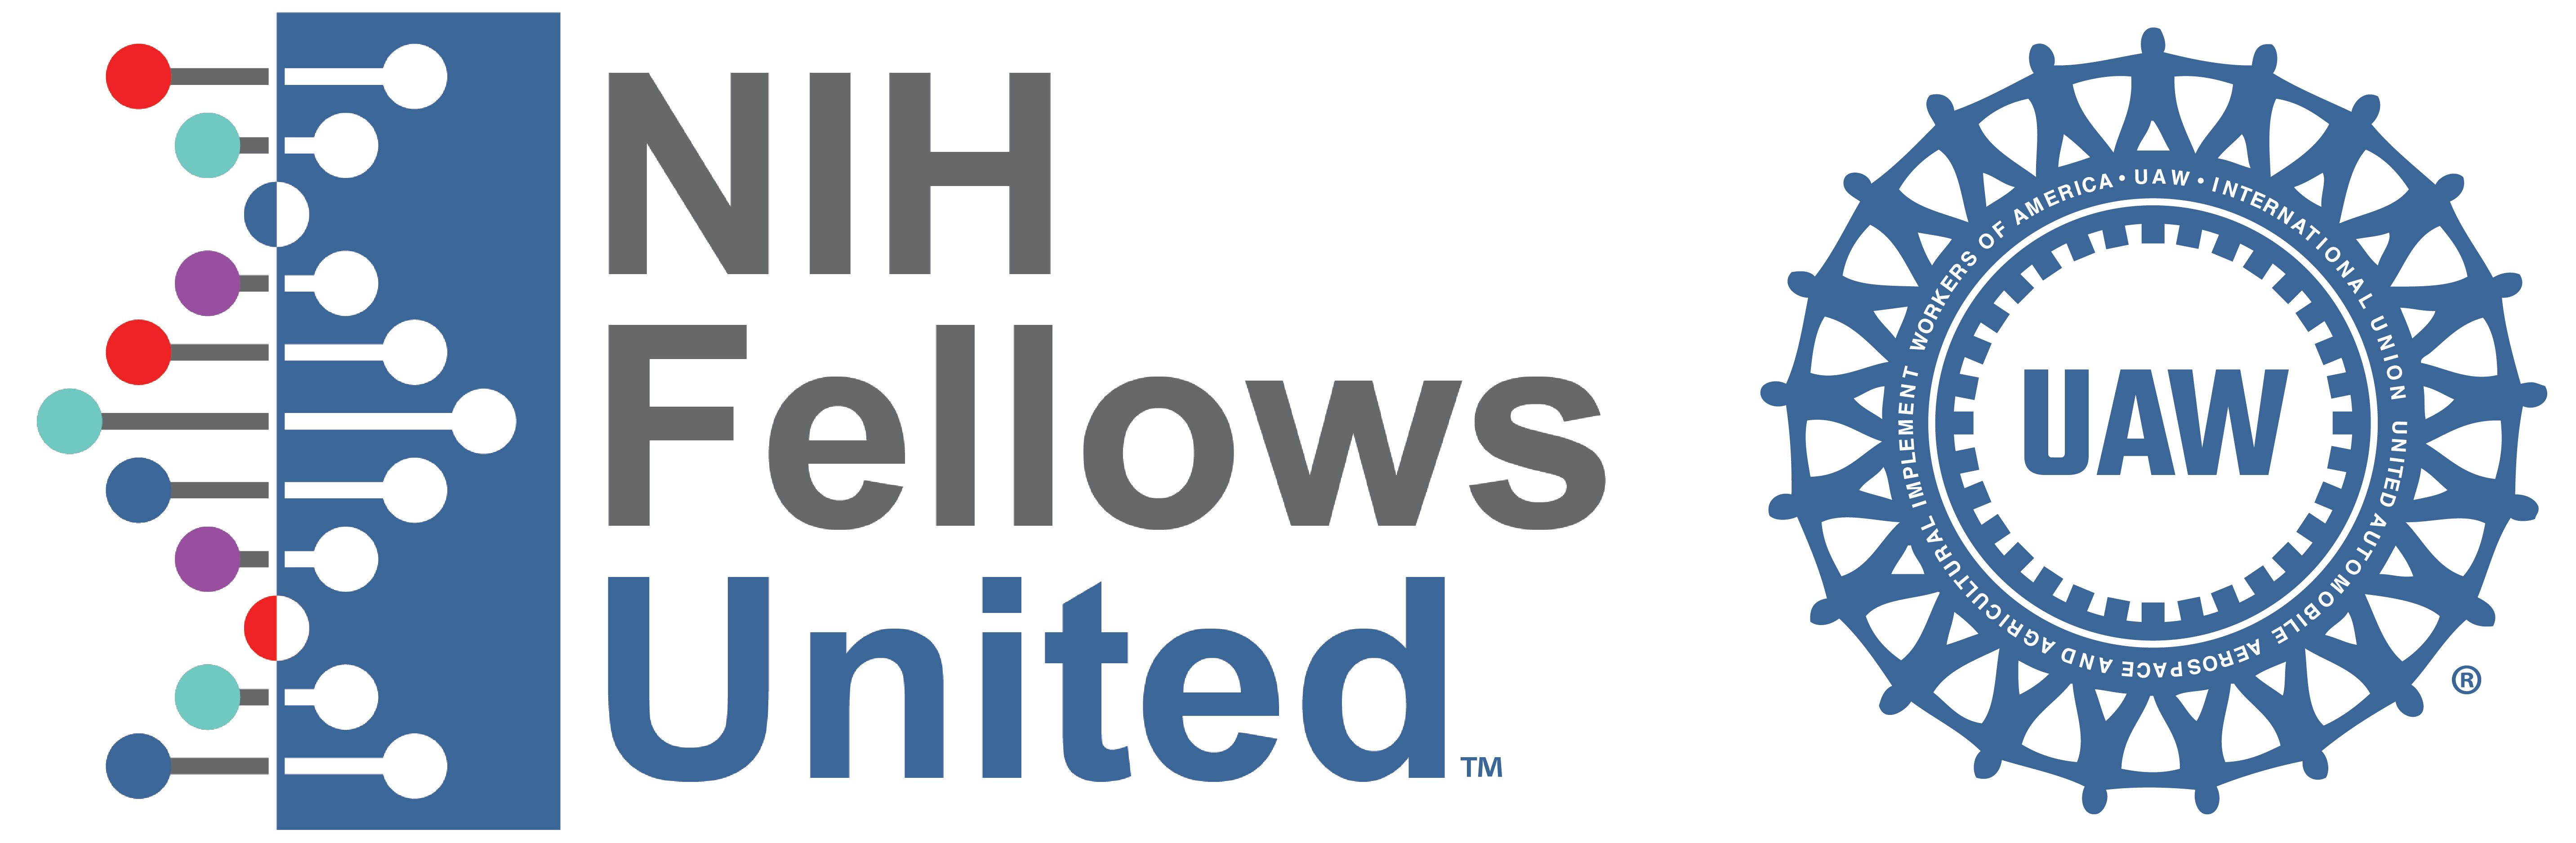 NIH Fellows United